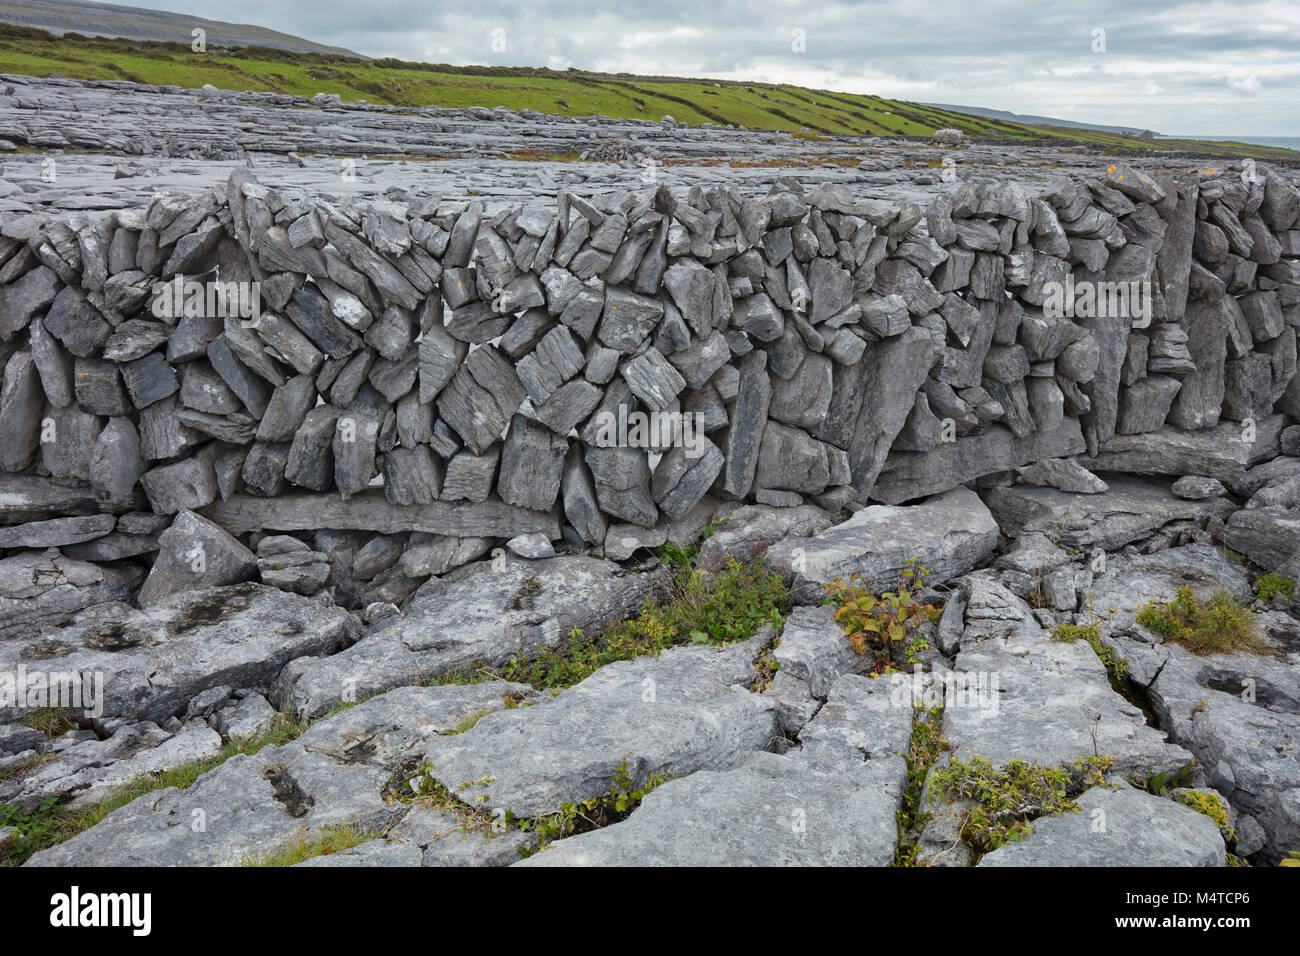 Stone wall and limestone pavement, The Burren, County Clare, Ireland. Stock Photo